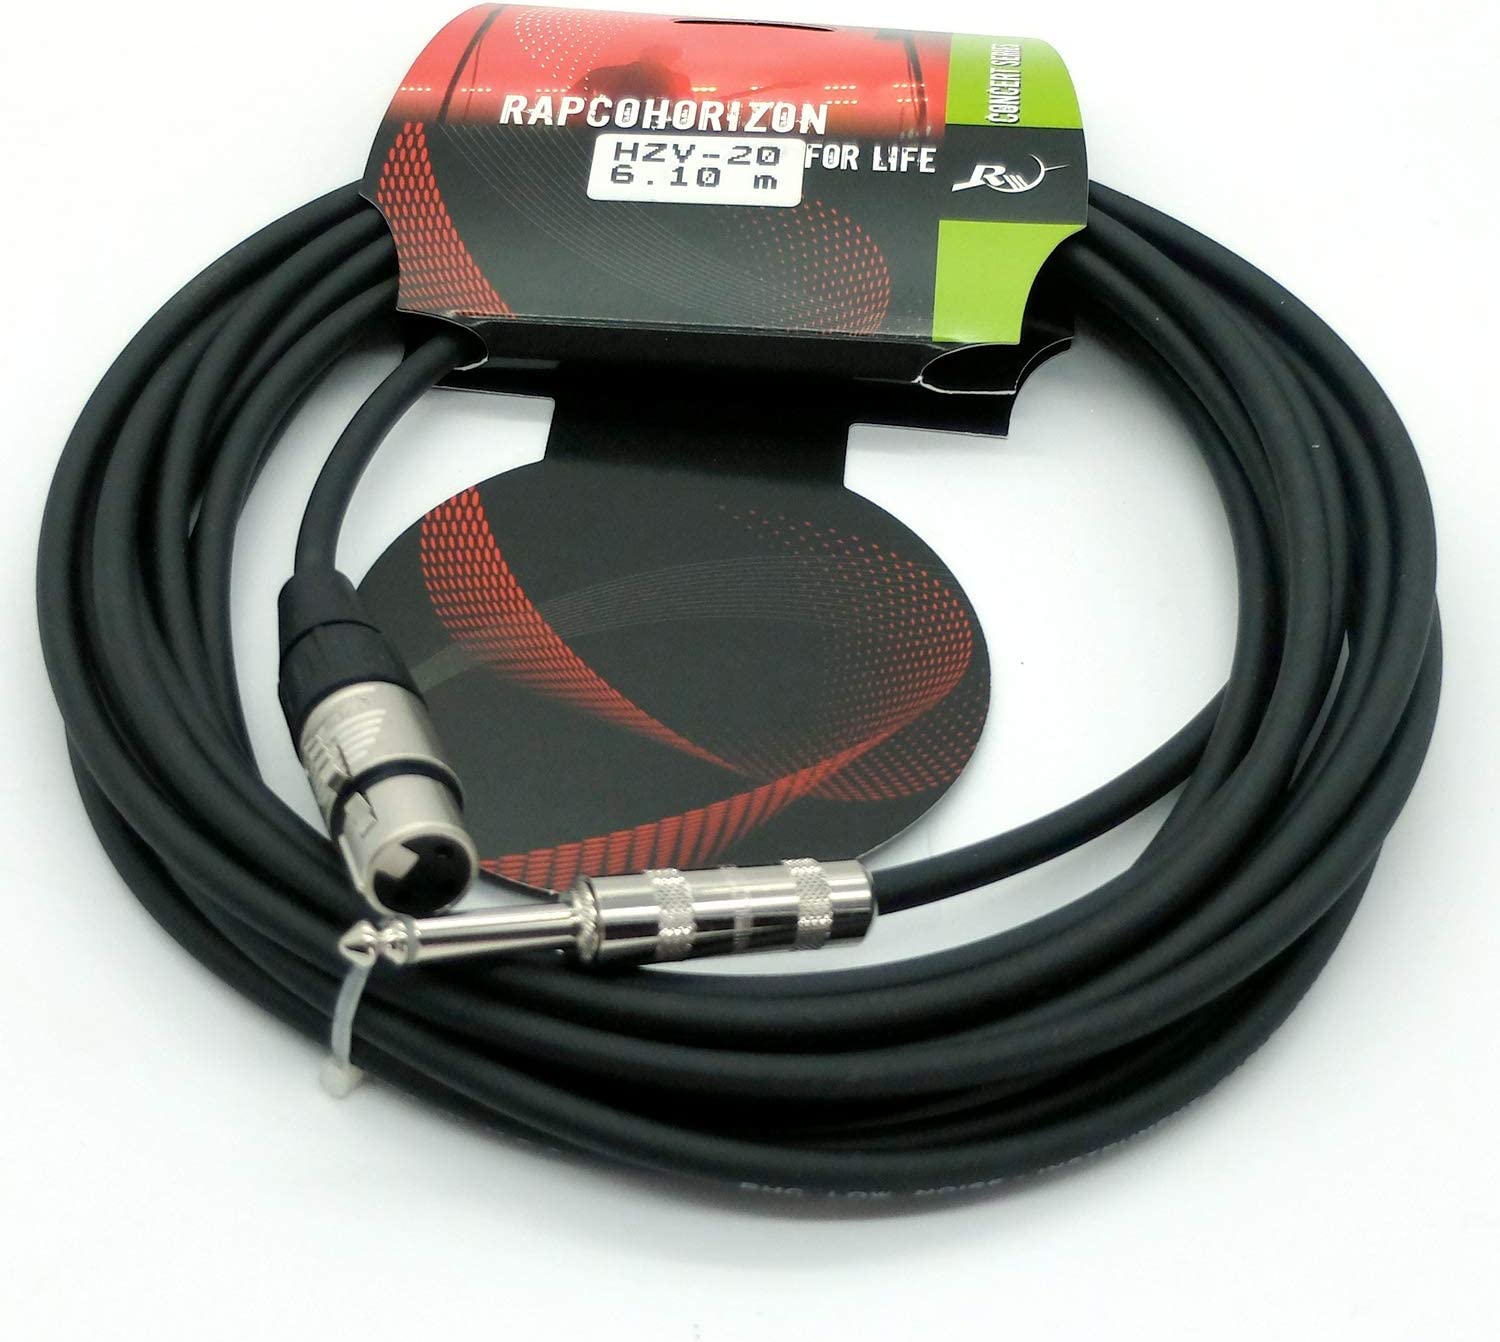 Rapcohorizon Cable para Micrófono Alta Impedancia HZV-20 6.08 mts, Conectores XLR Hembra Rean -Plug 1/4 Neutrik,Cable Calibre 24, Color Negro Mate.